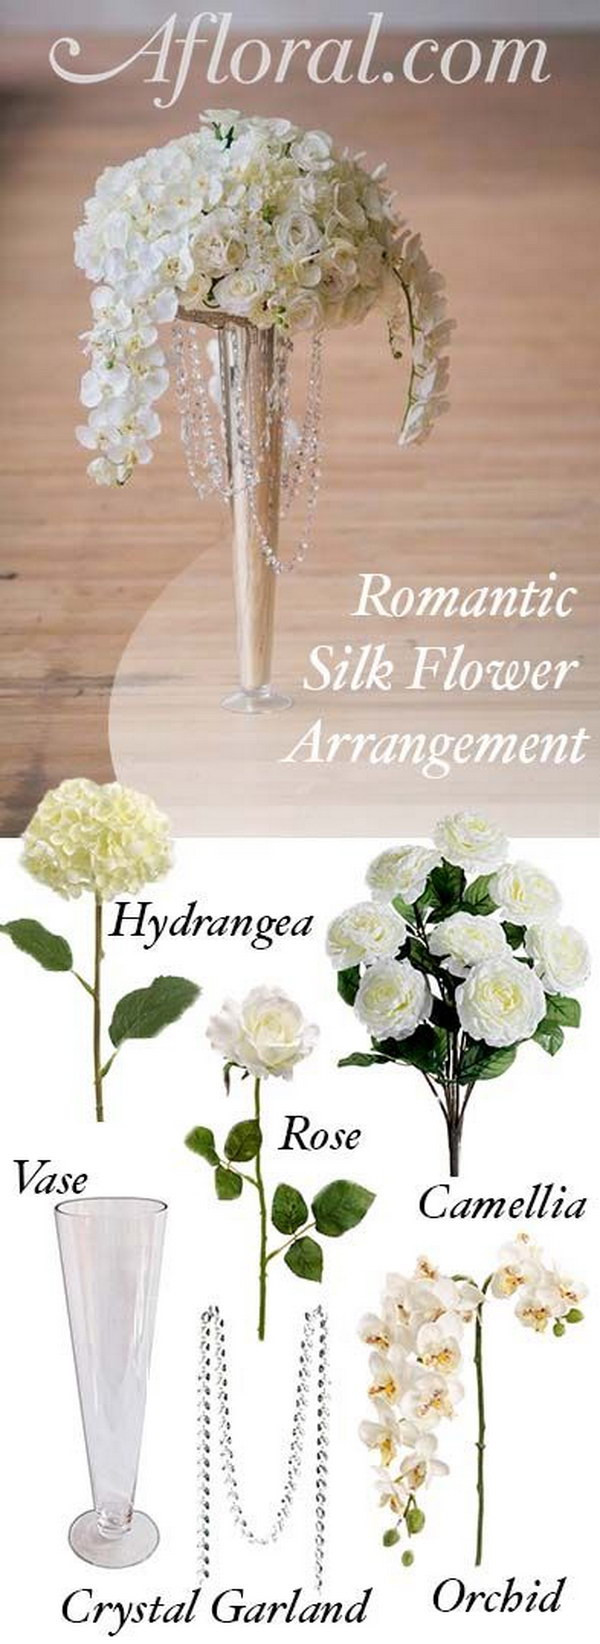 DIY Wedding Flower Arrangements
 Awesome DIY Wedding Centerpiece Ideas & Tutorials